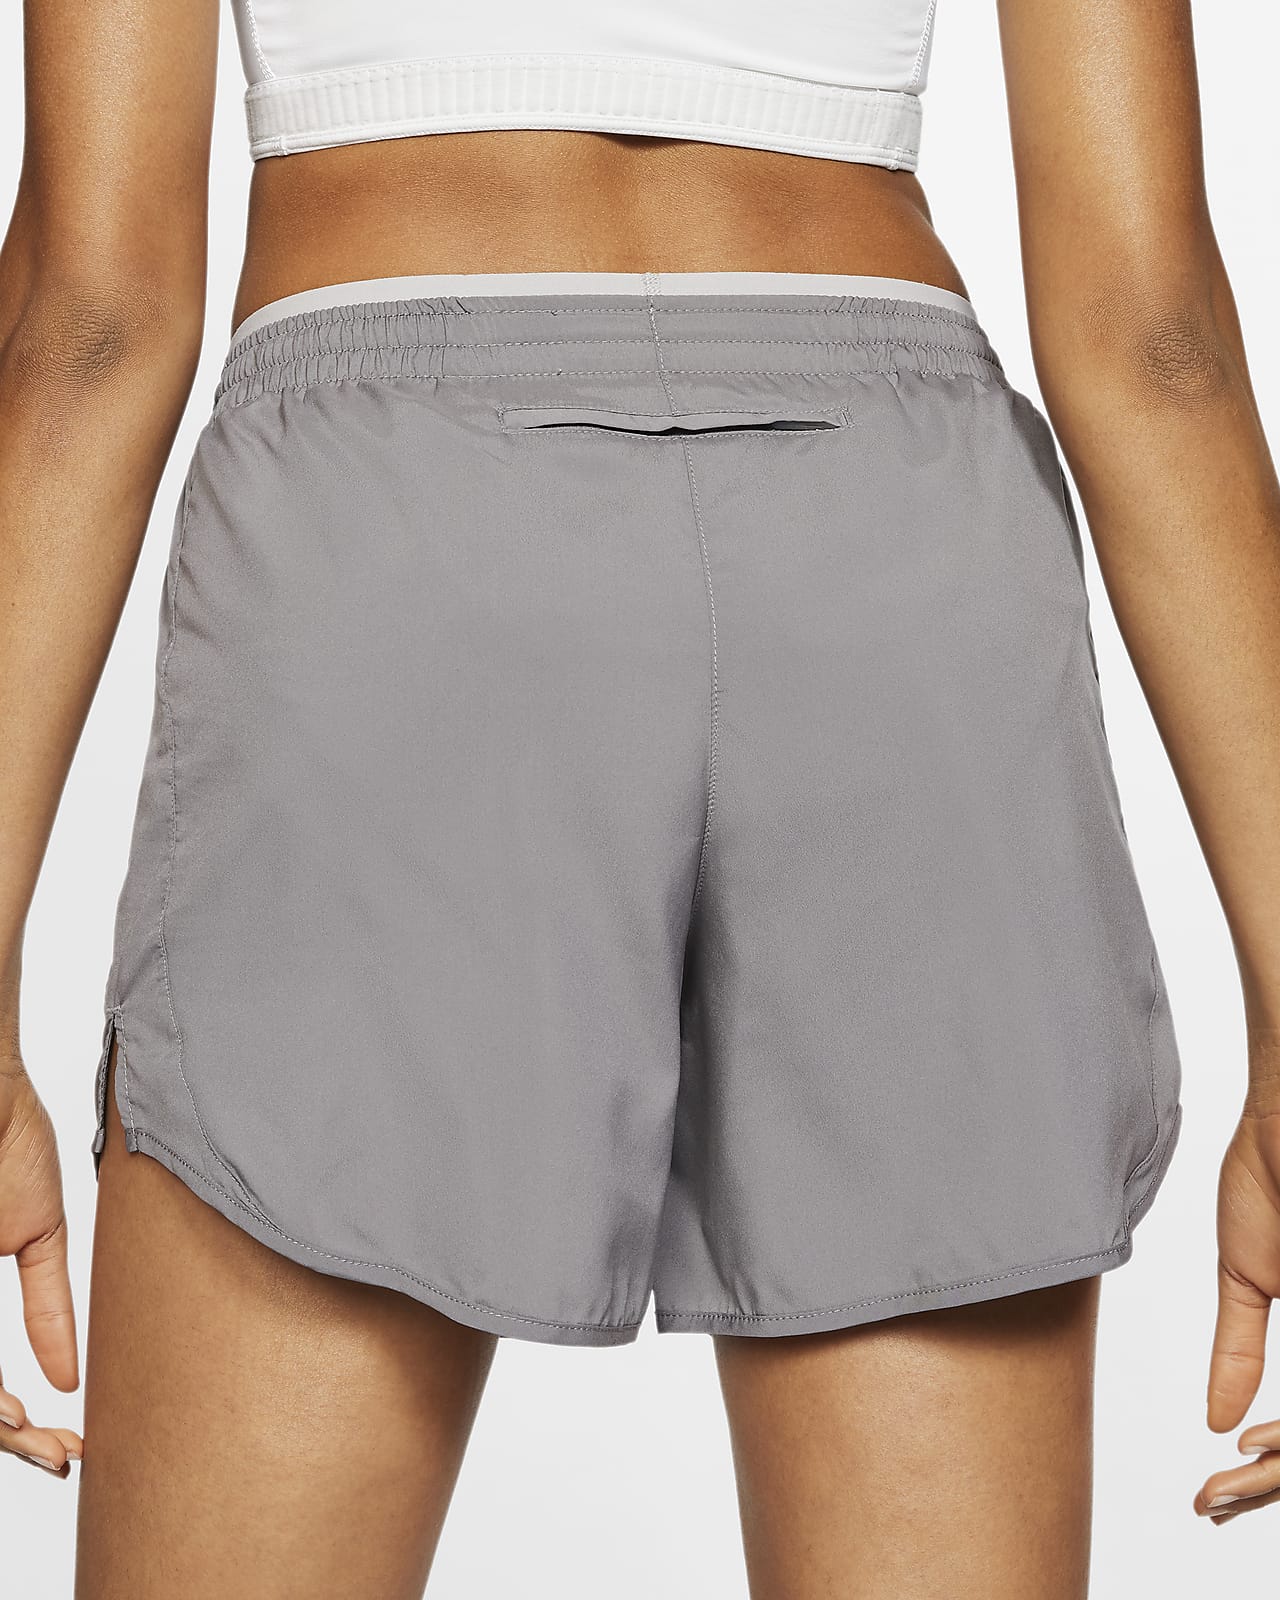 nike women's 5 inch running shorts